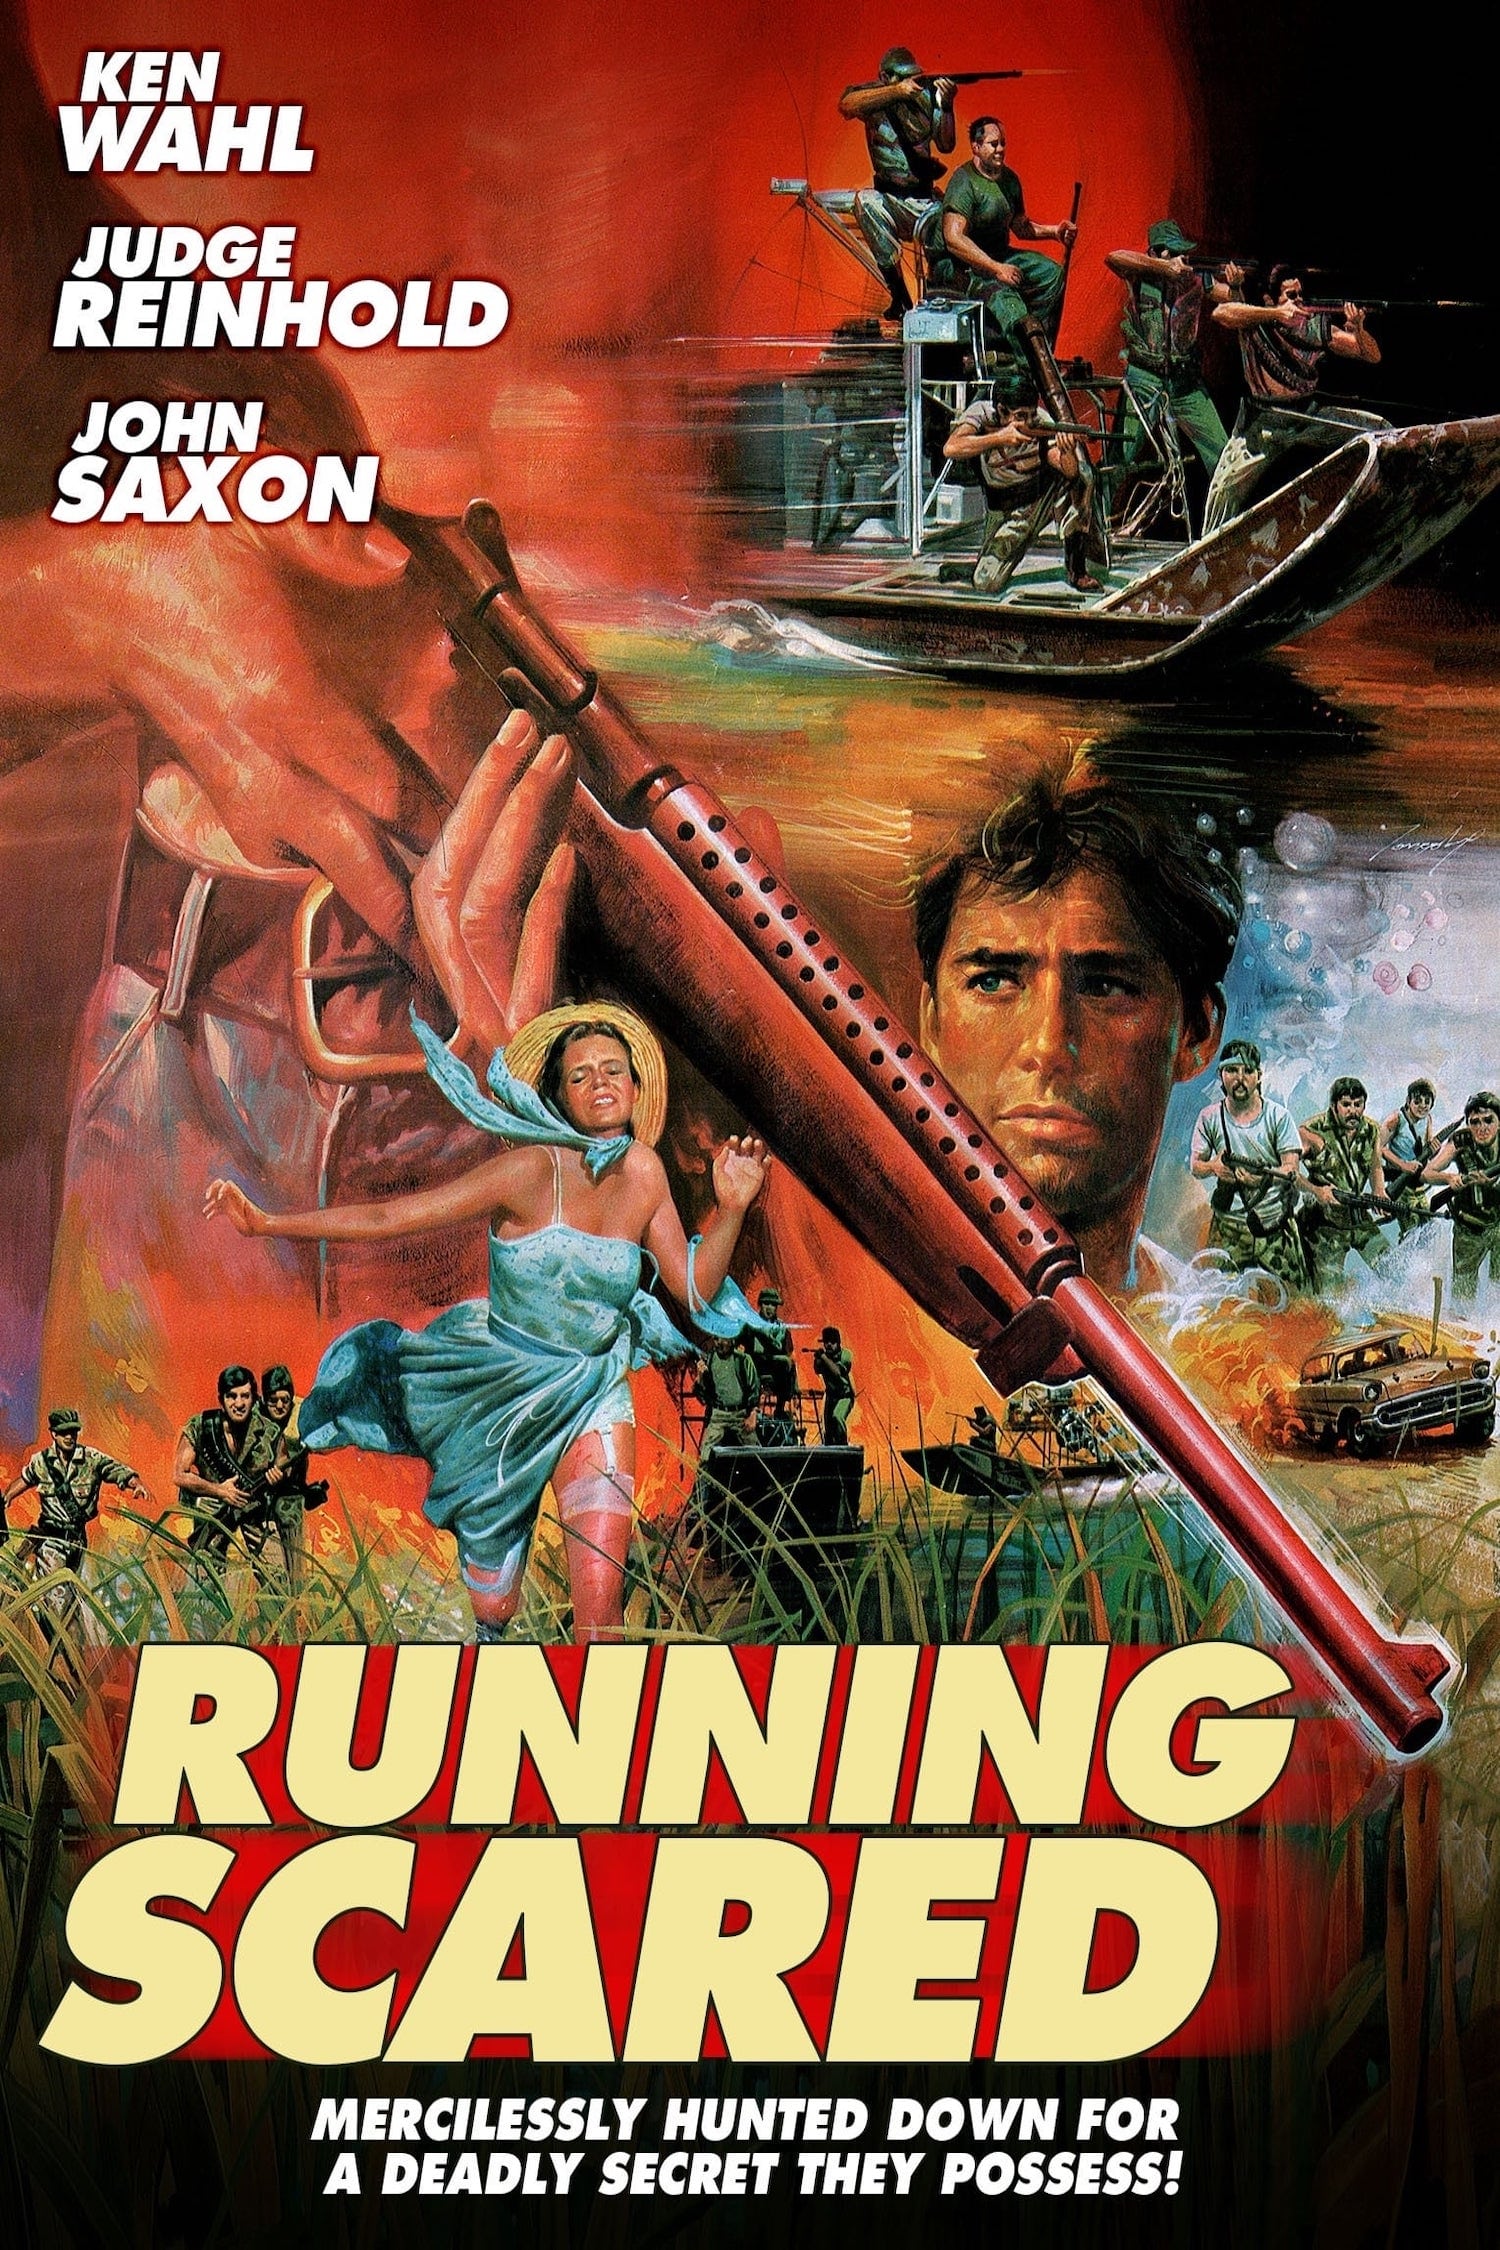 Running Scared (1980)